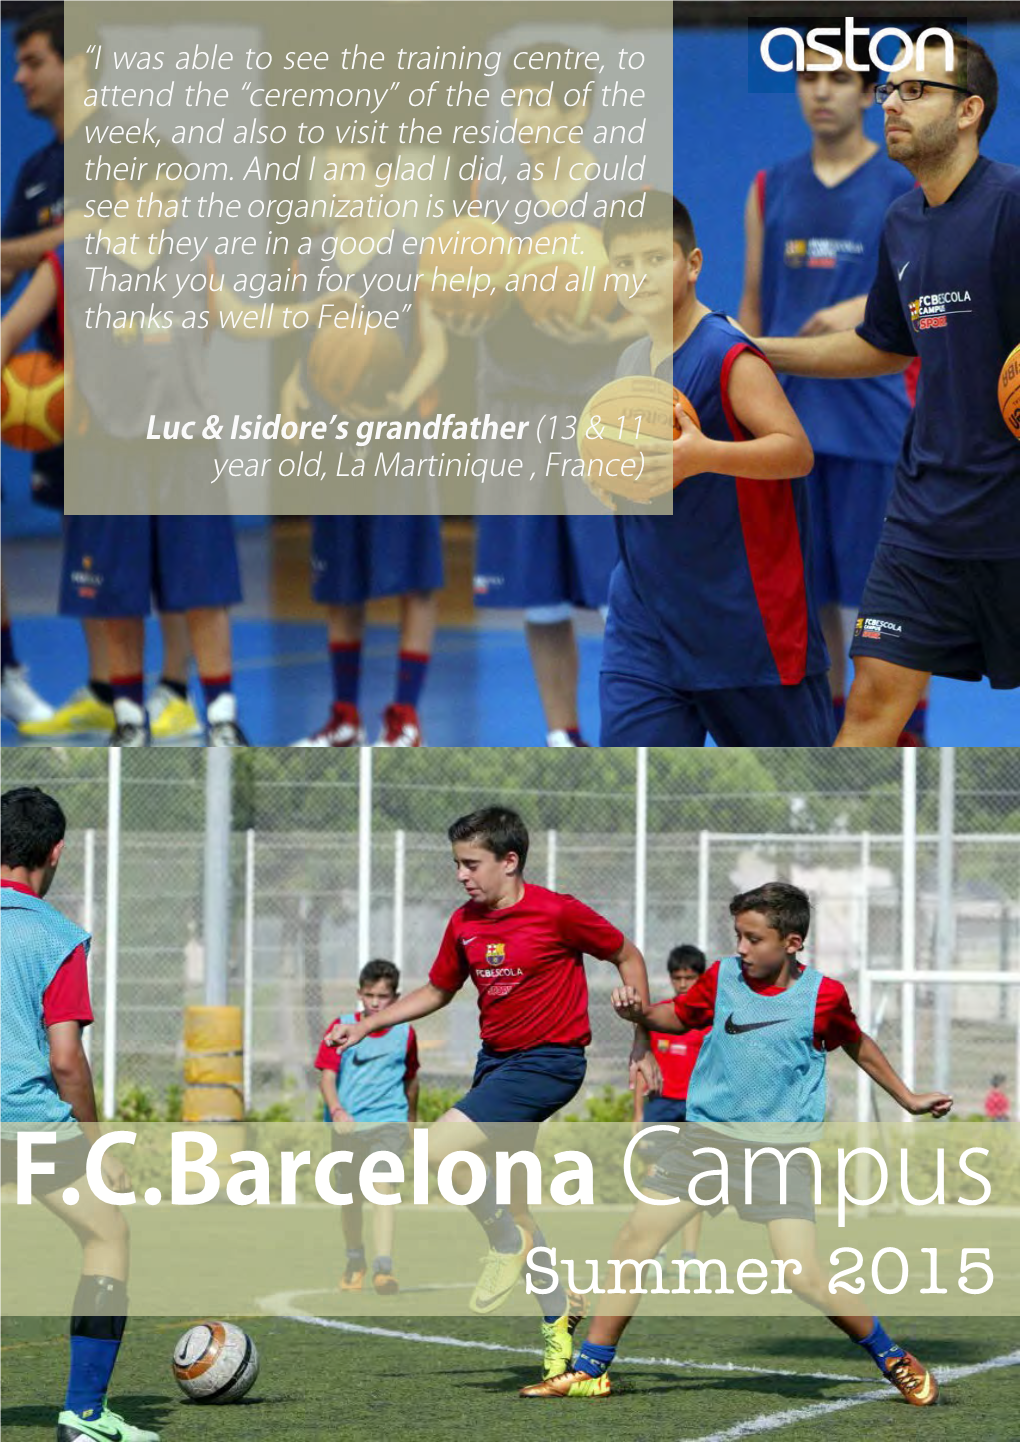 F.C.Barcelona Campus Summer 2015 Programme